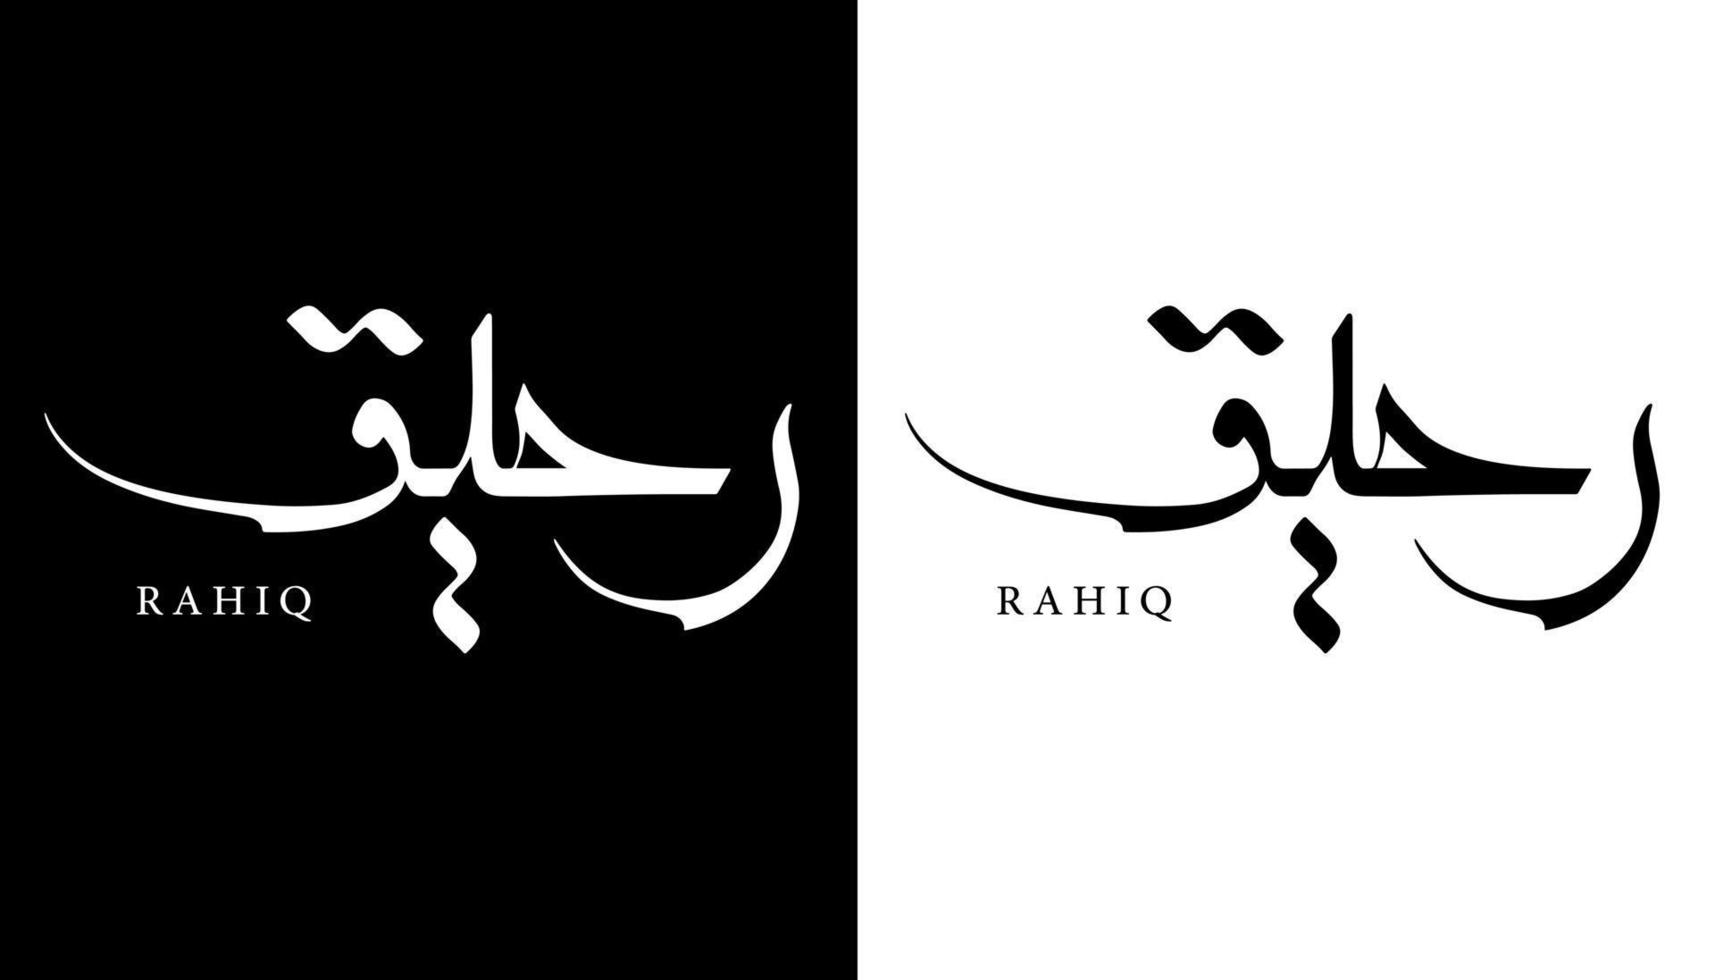 nombre de caligrafía árabe traducido 'rahiq' letras árabes alfabeto fuente letras islámicas logo vector ilustración